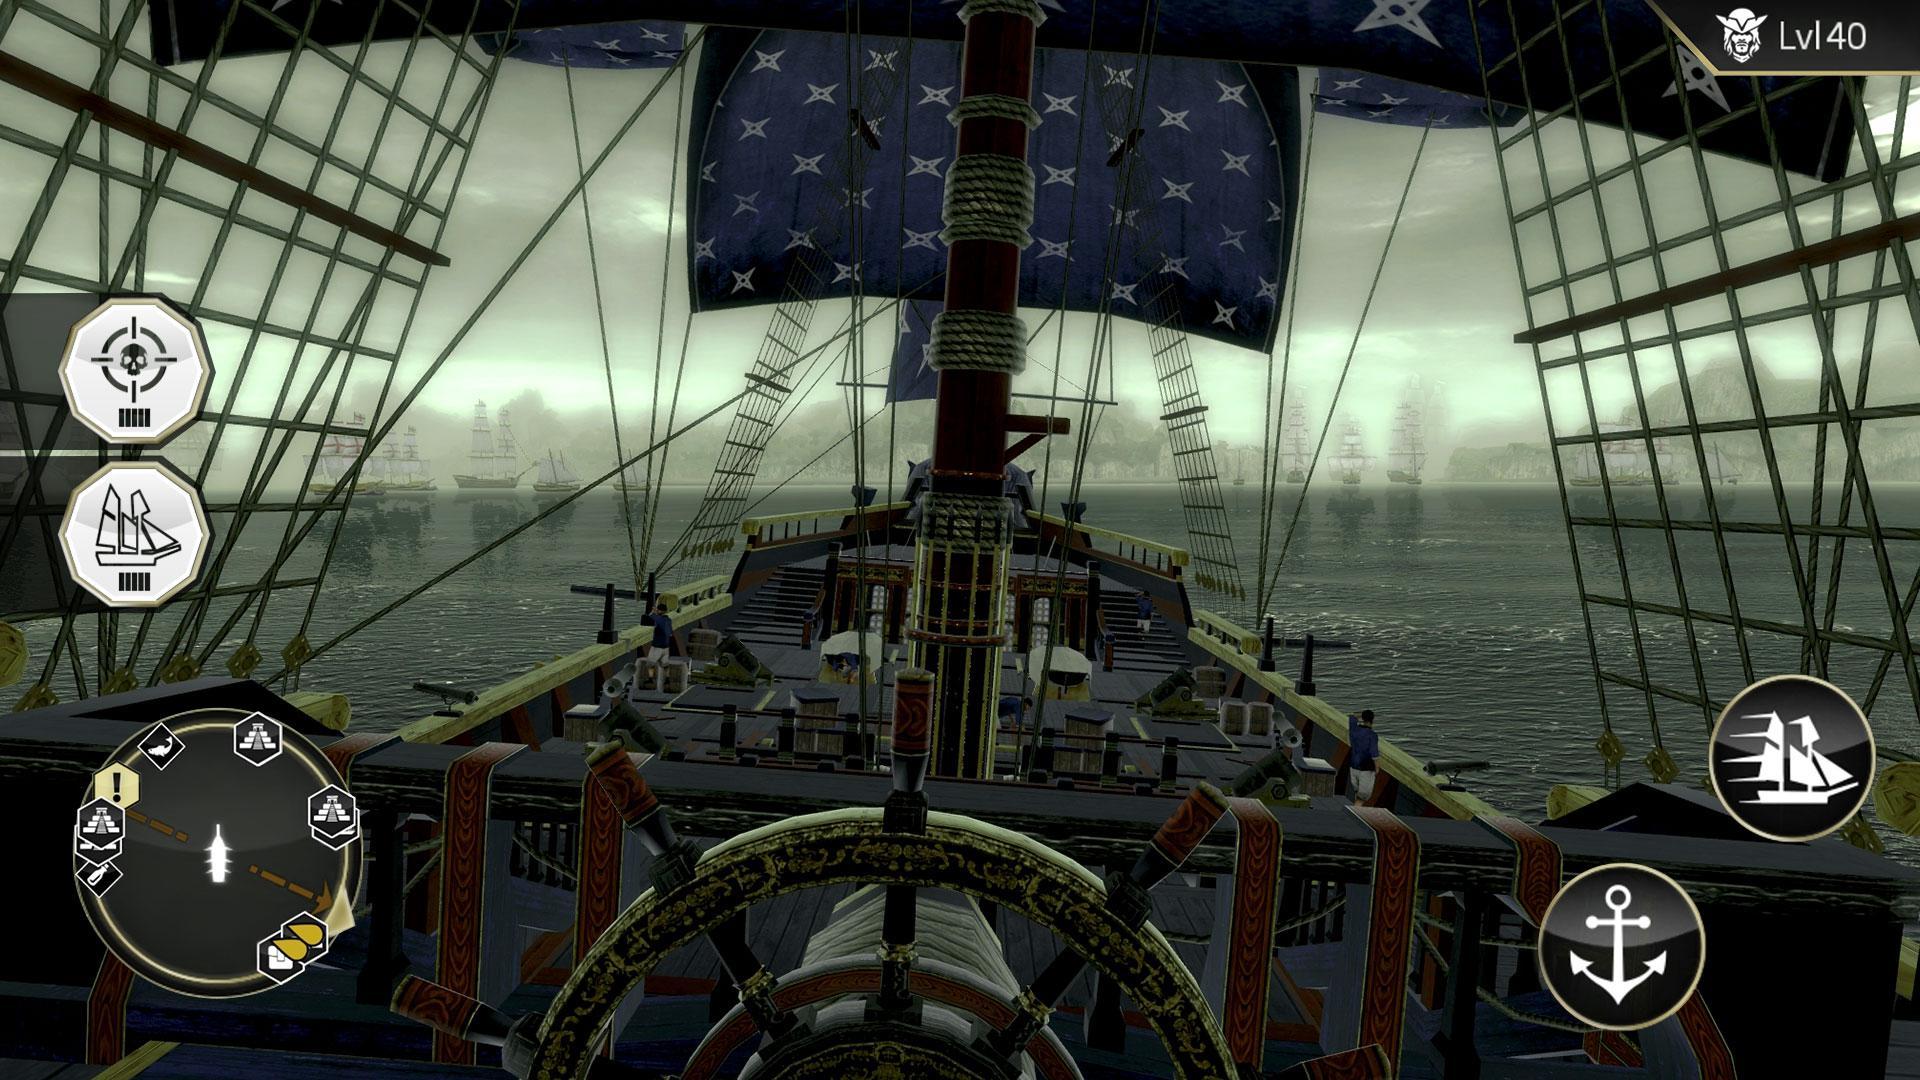 Игра плавать на корабле. Игры про корабли. Игры про пиратов на андроид. Assassin's Creed Pirates на андроид. Игра про пиратов на андроид на воздушный кораблях.